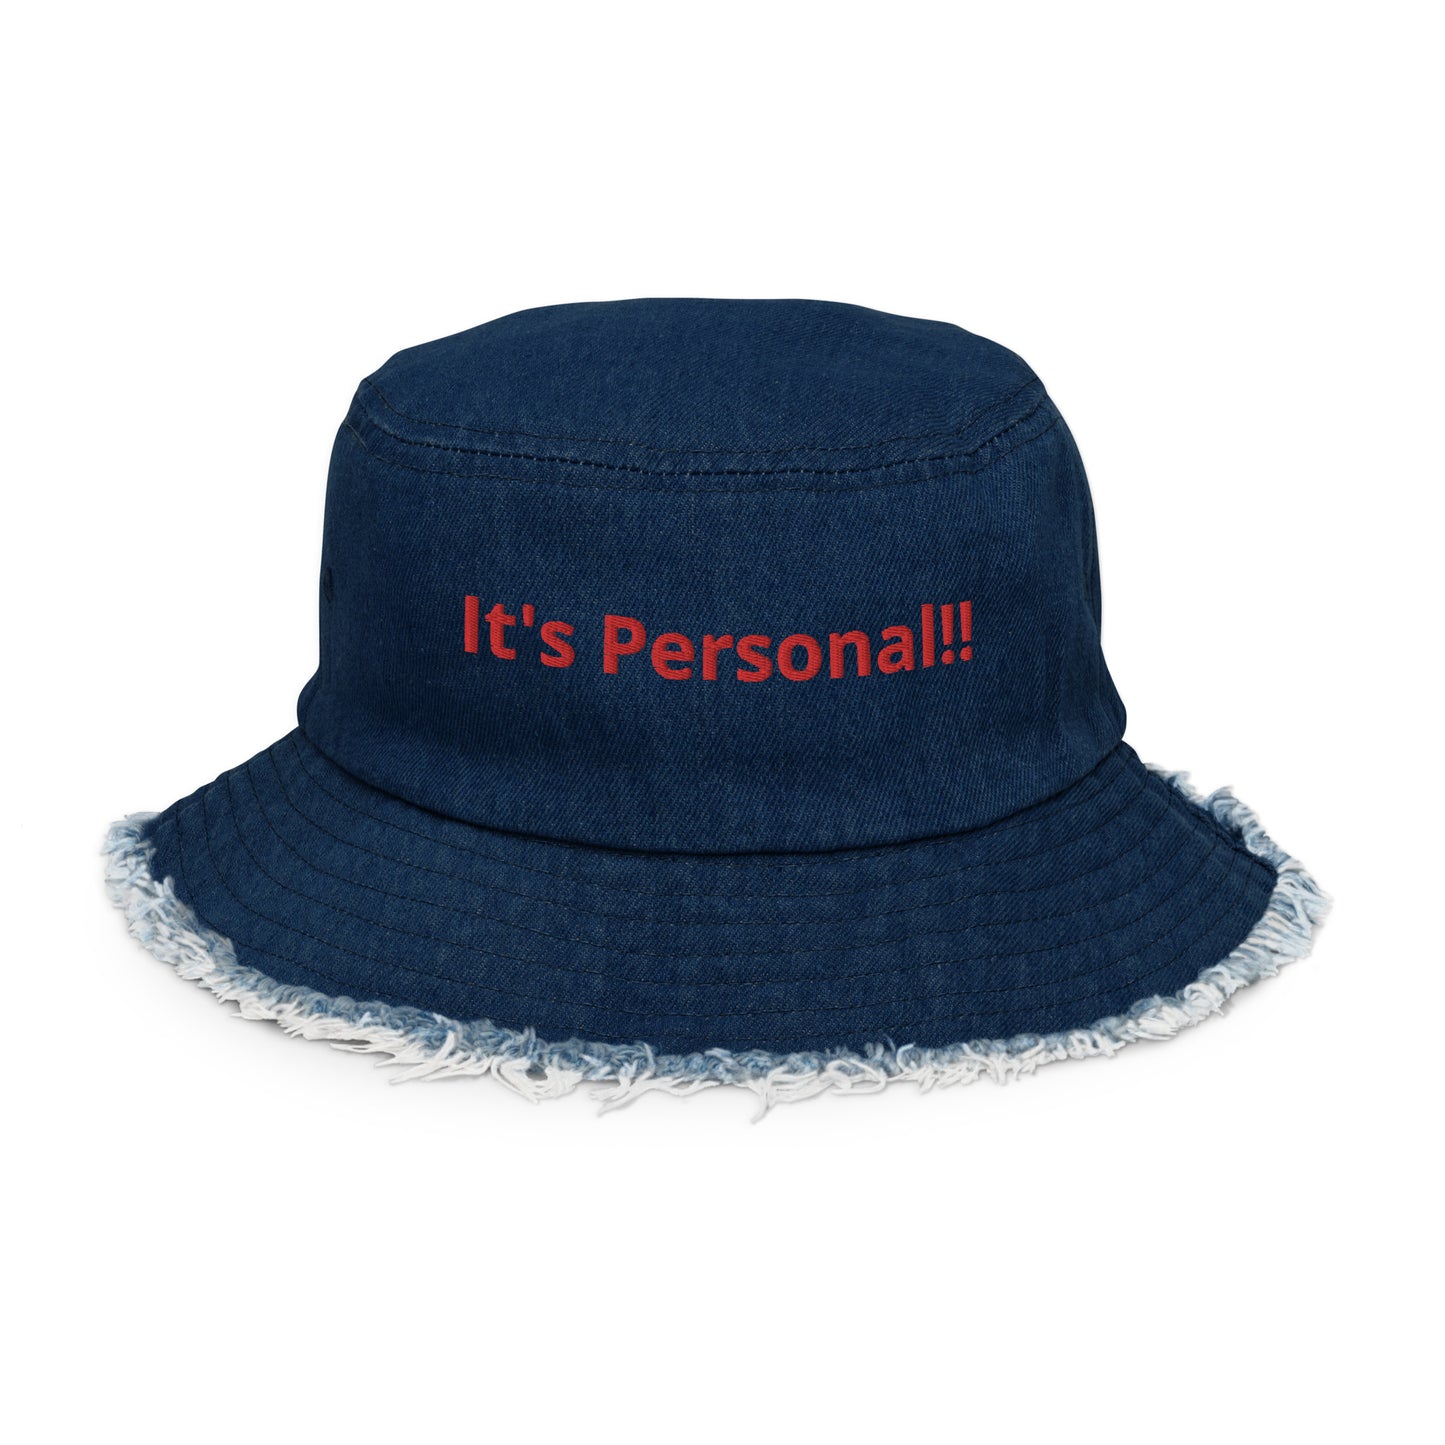 It's Personal!! Distressed Denim Bucket Hat